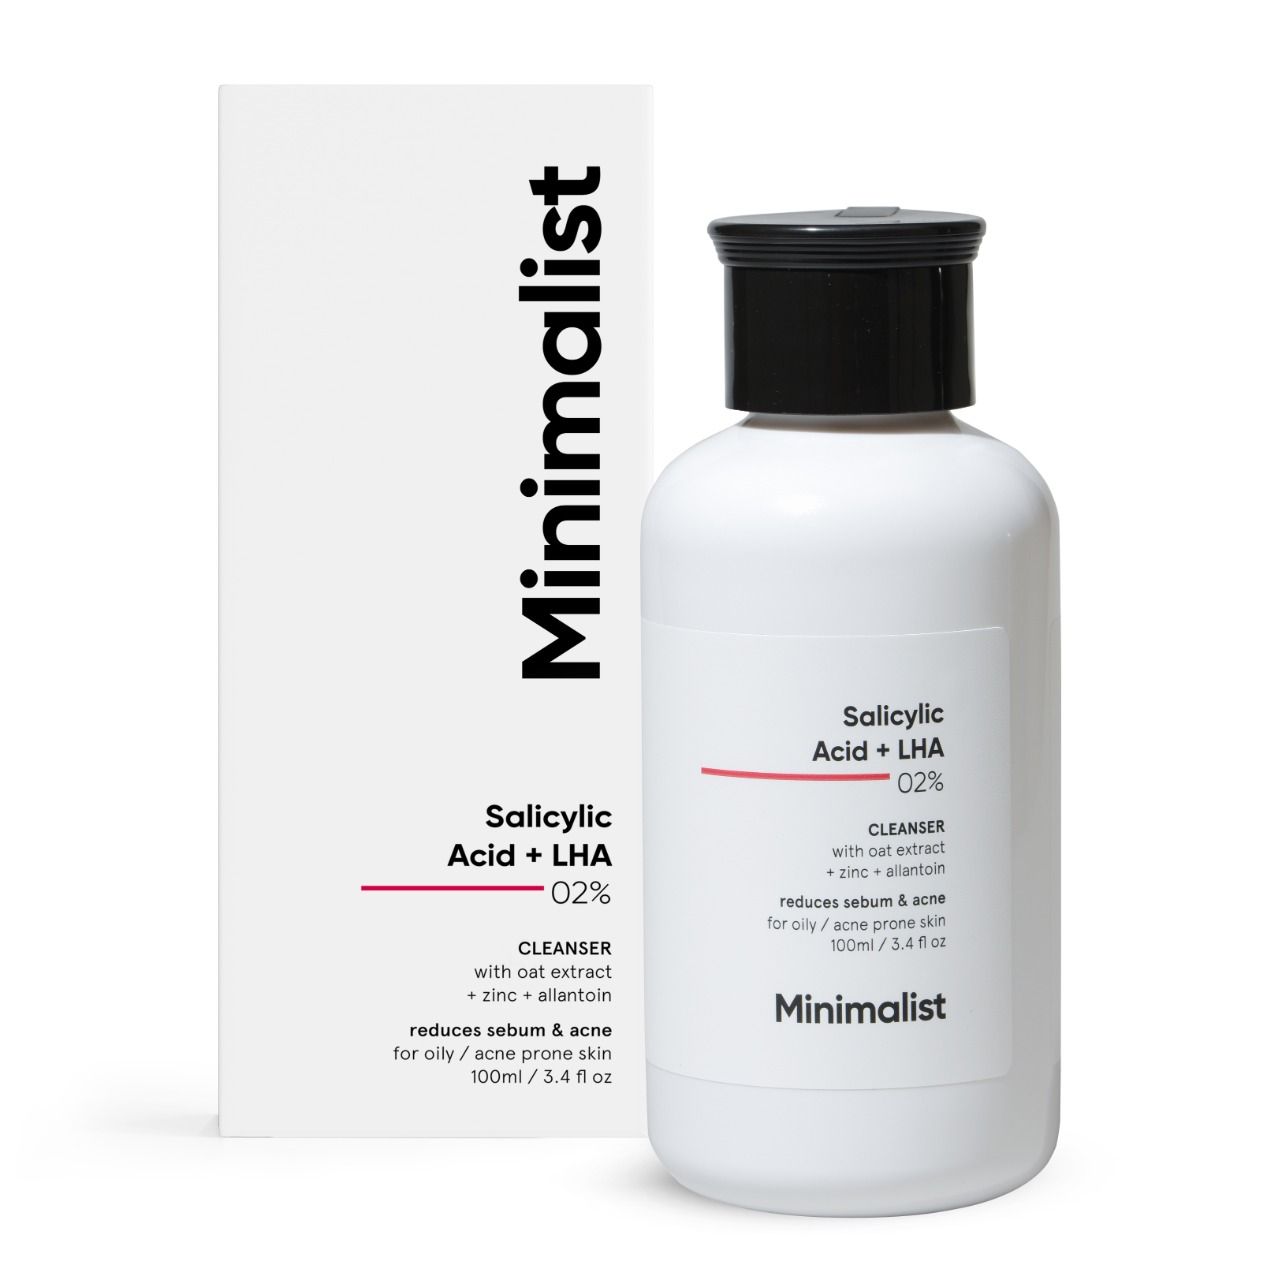 Minimalist 2% Salicylic Acid + LHA Cleanser With Zinc For Reducing Sebum & Acne